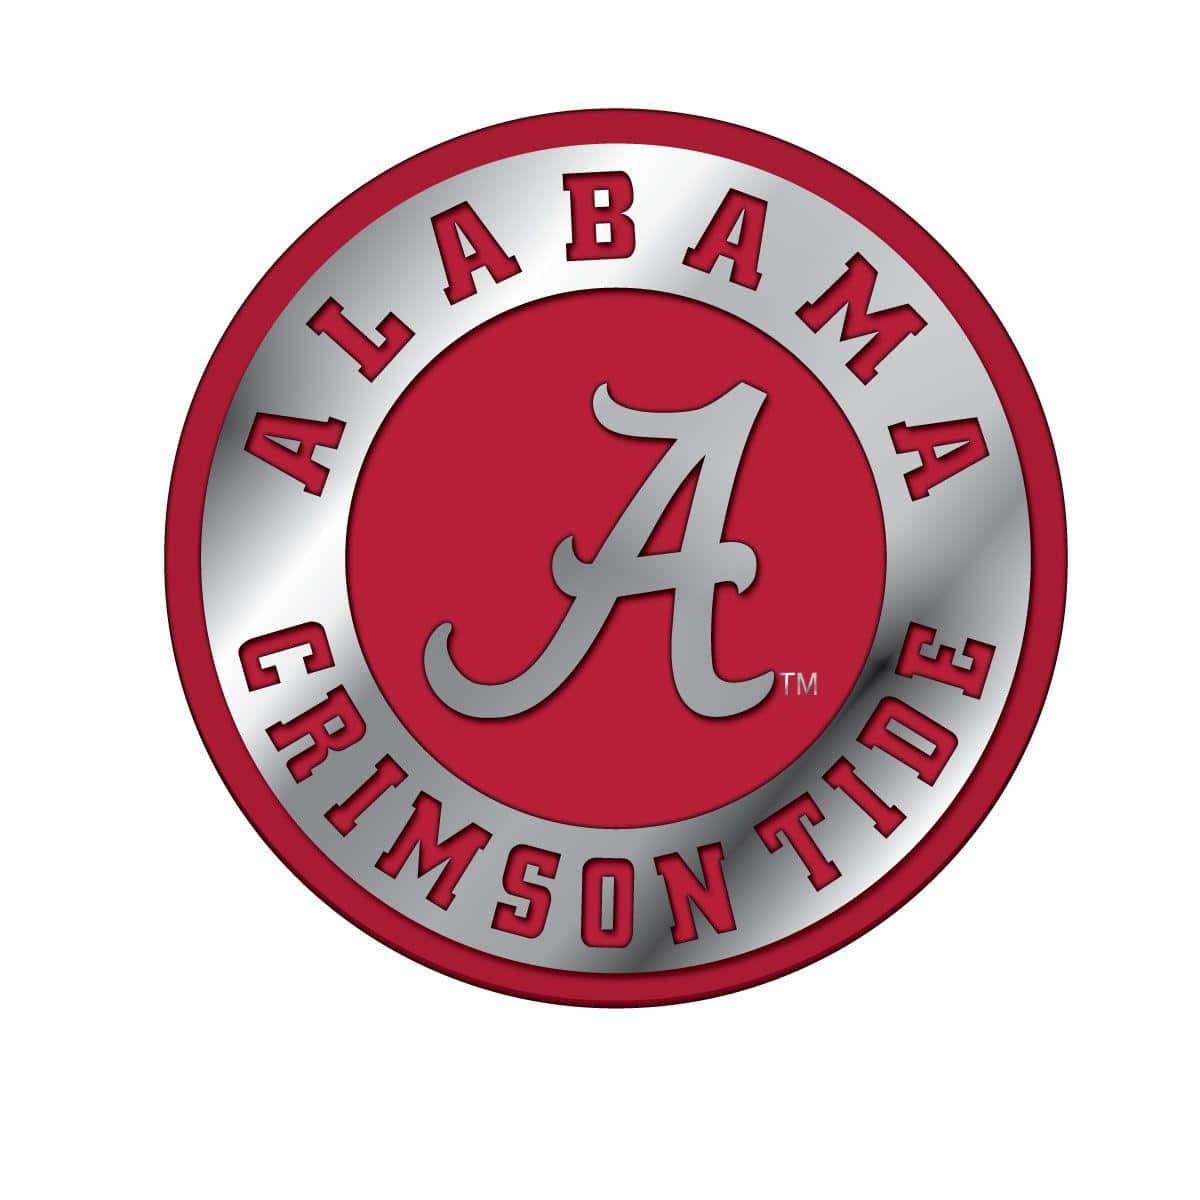 Reach for the Alabama Crimson Tide!